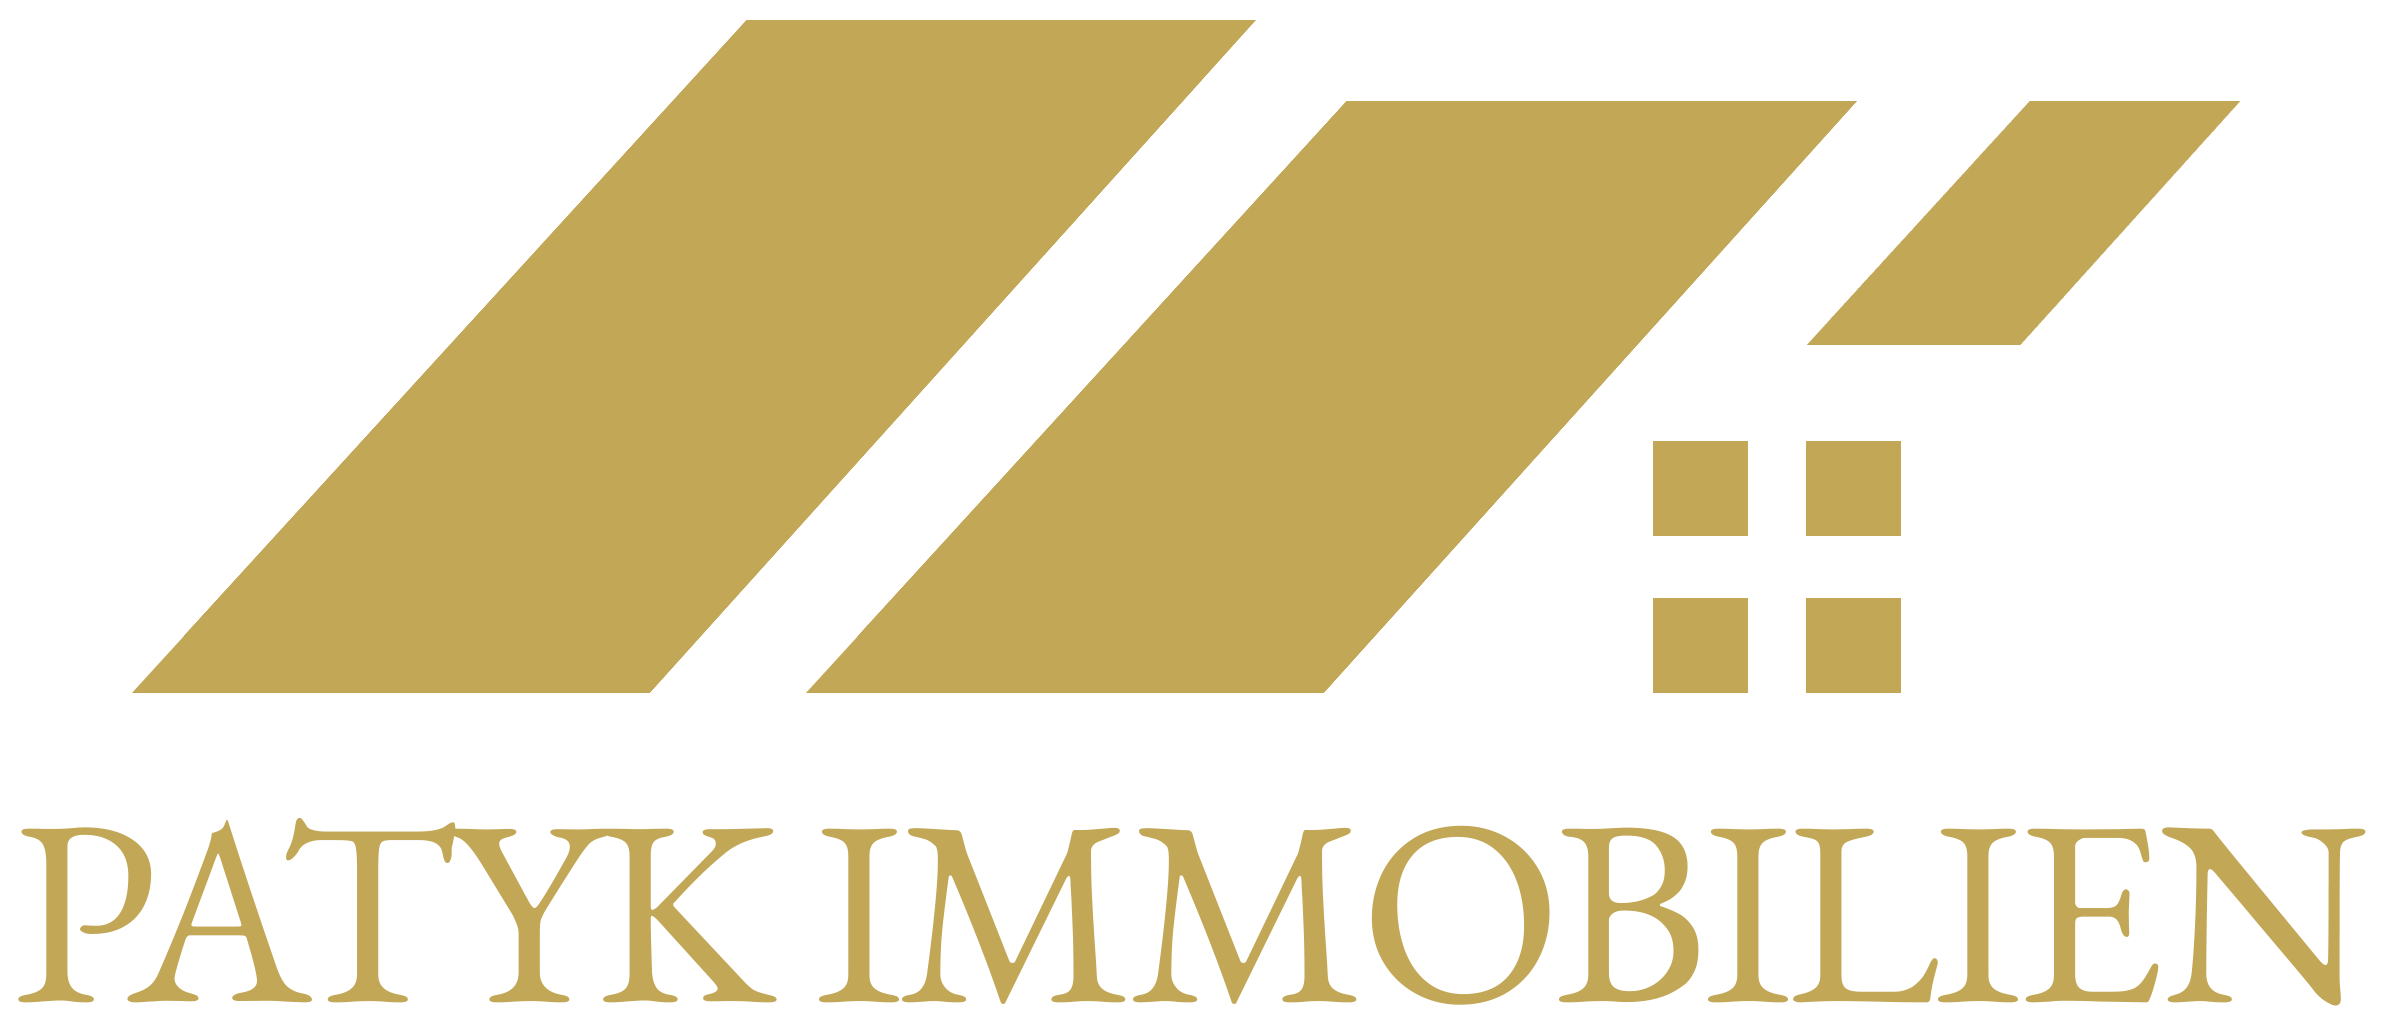 Logo_Patyk_immobilien_gold